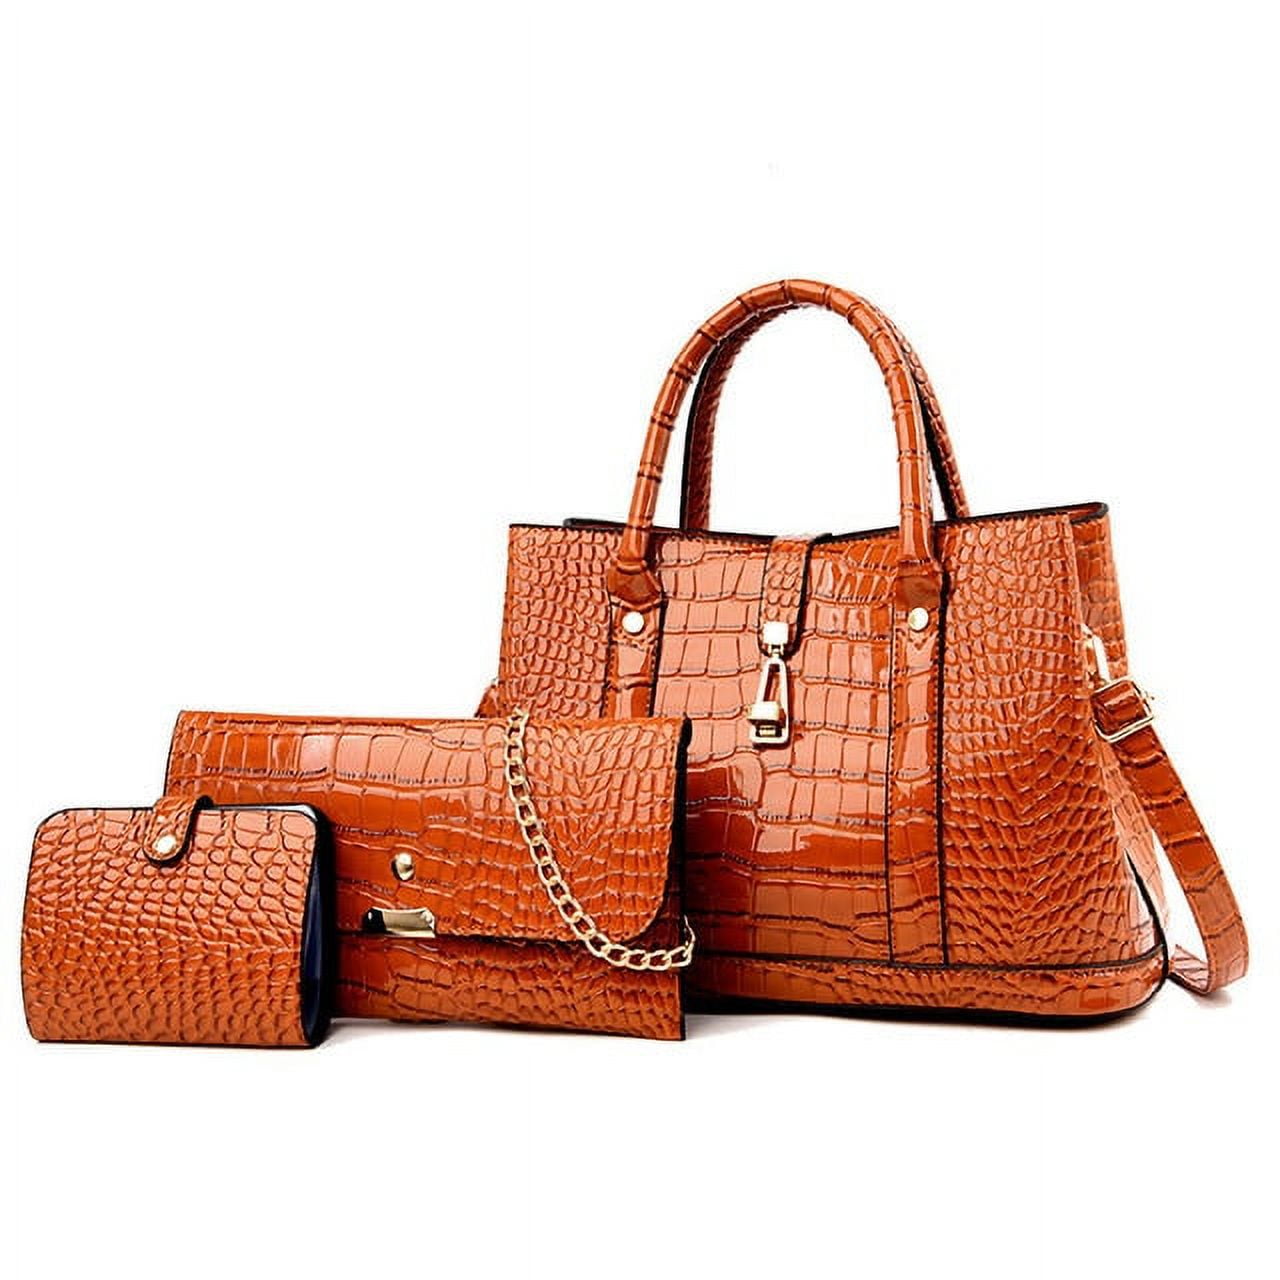 Crocodile Handbags Purses Shoulder Bags for Women | Bags, Leather handbags,  Leather